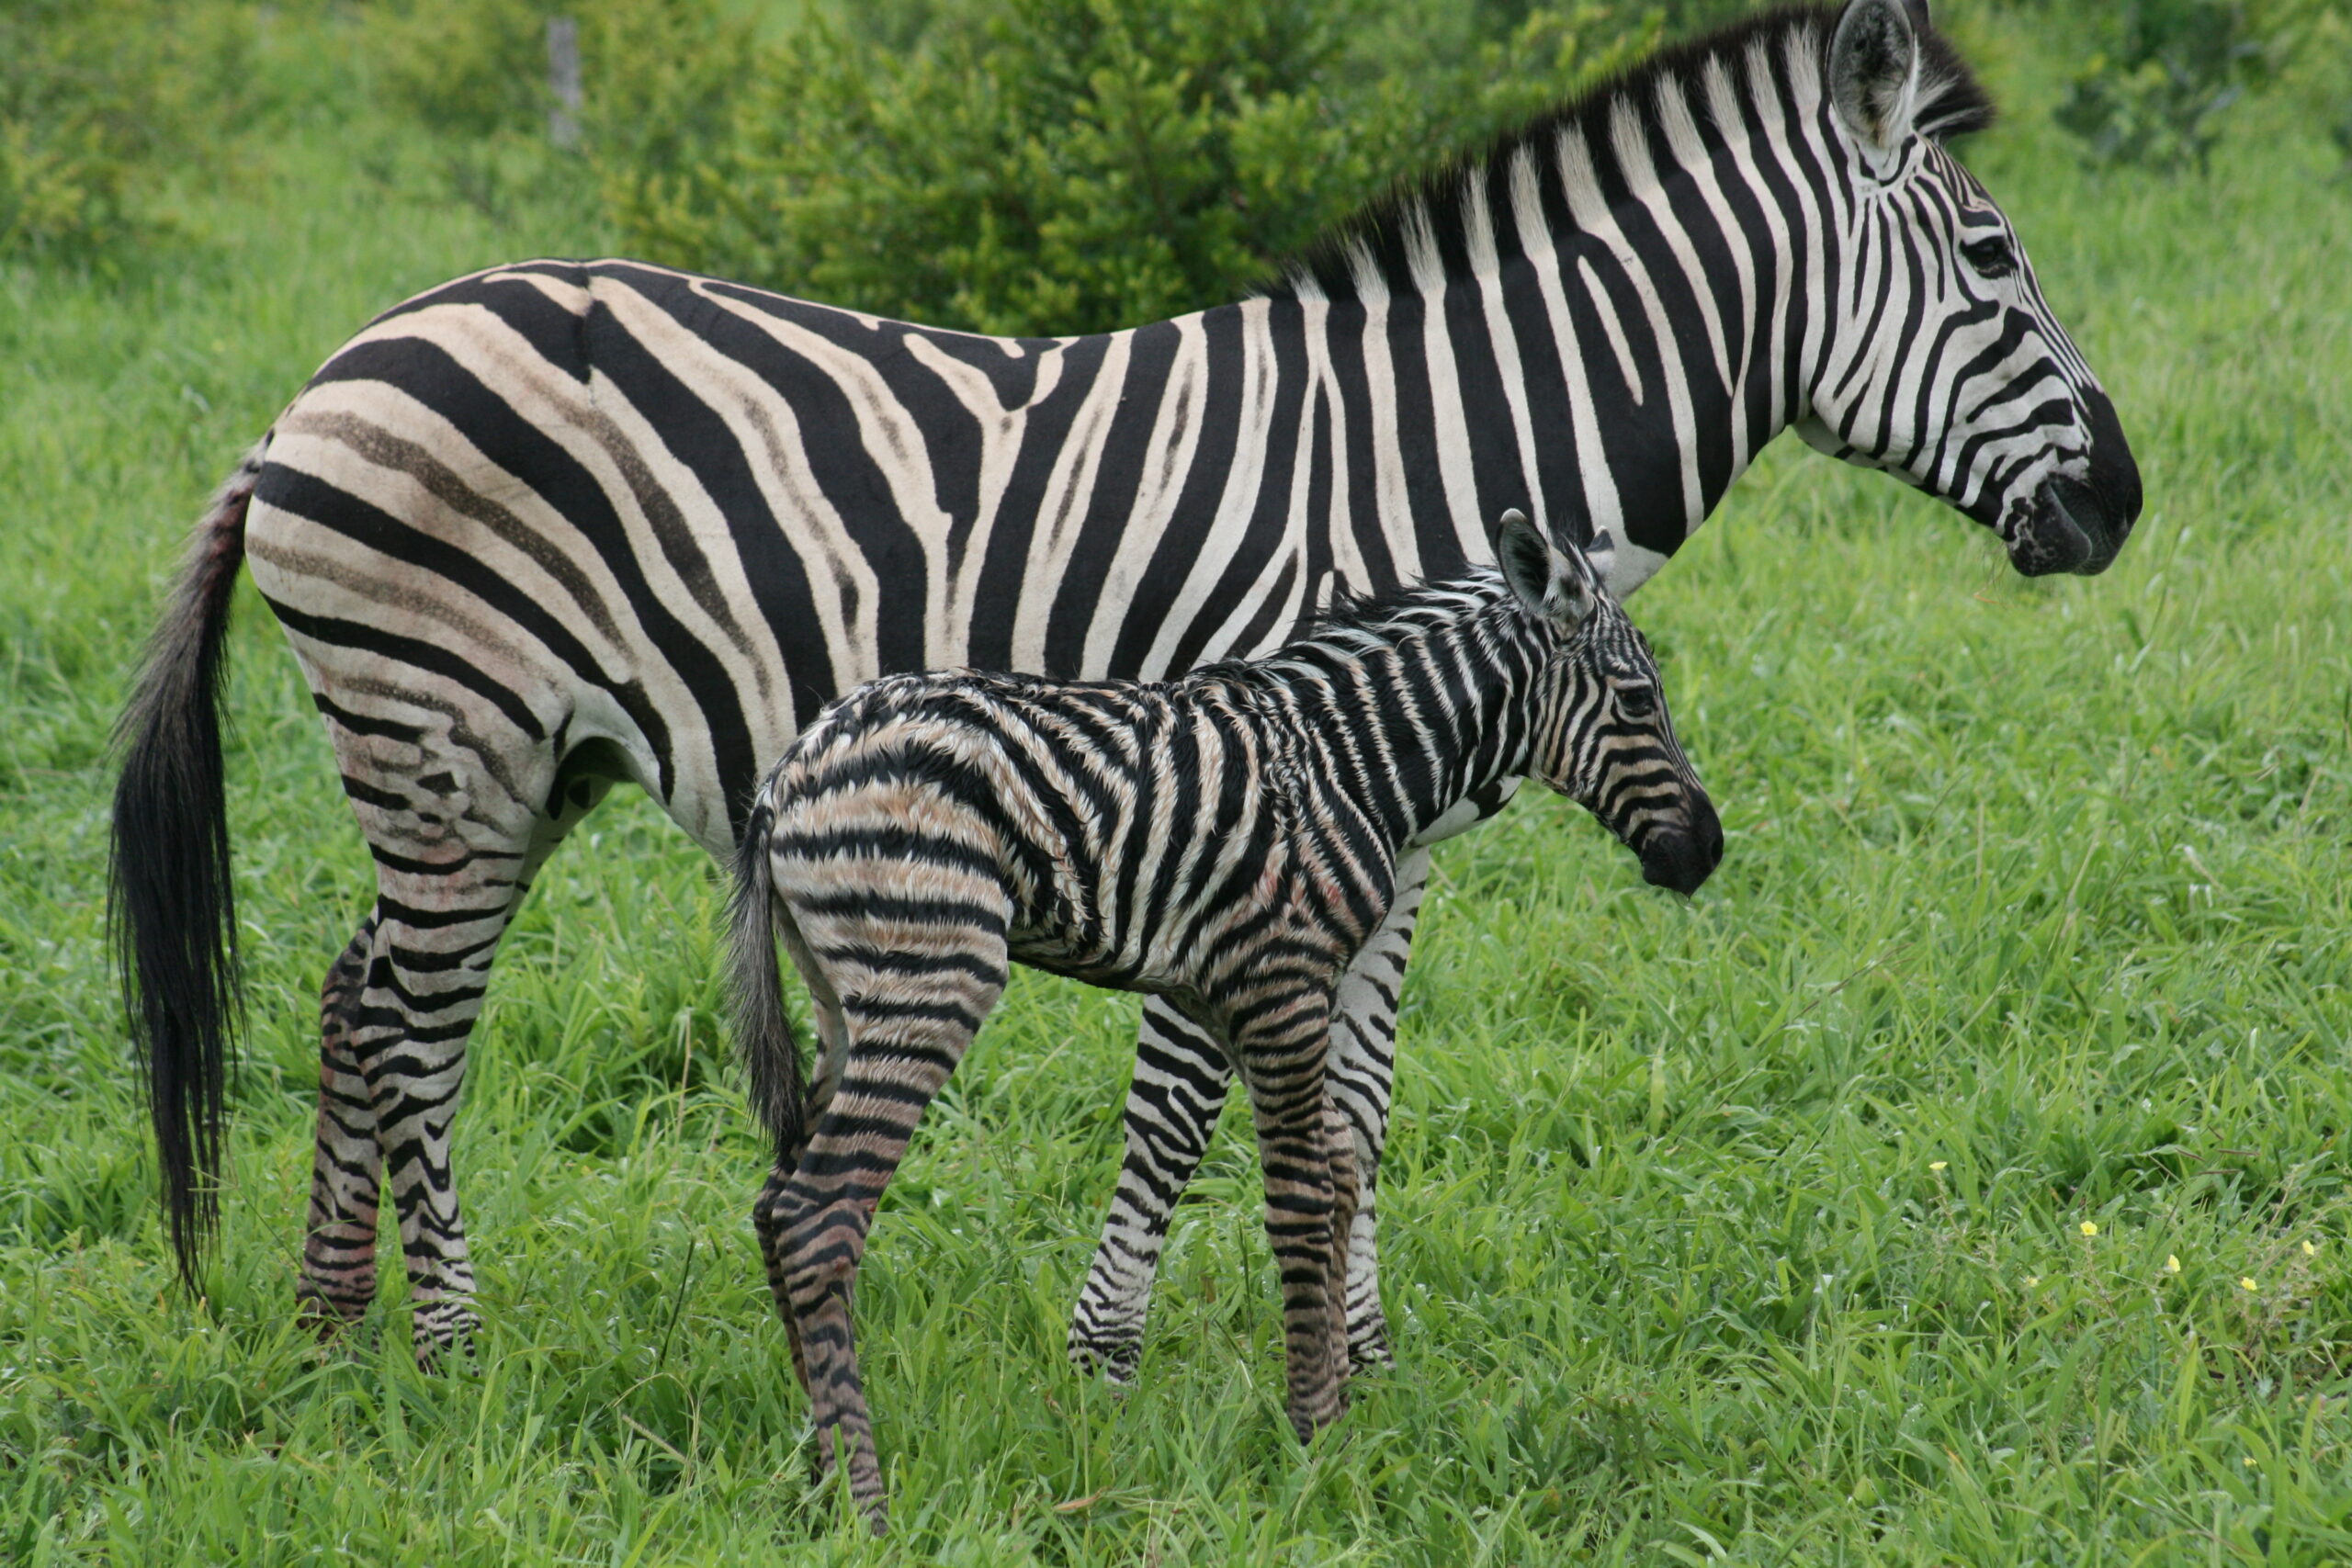 Botswana Safari